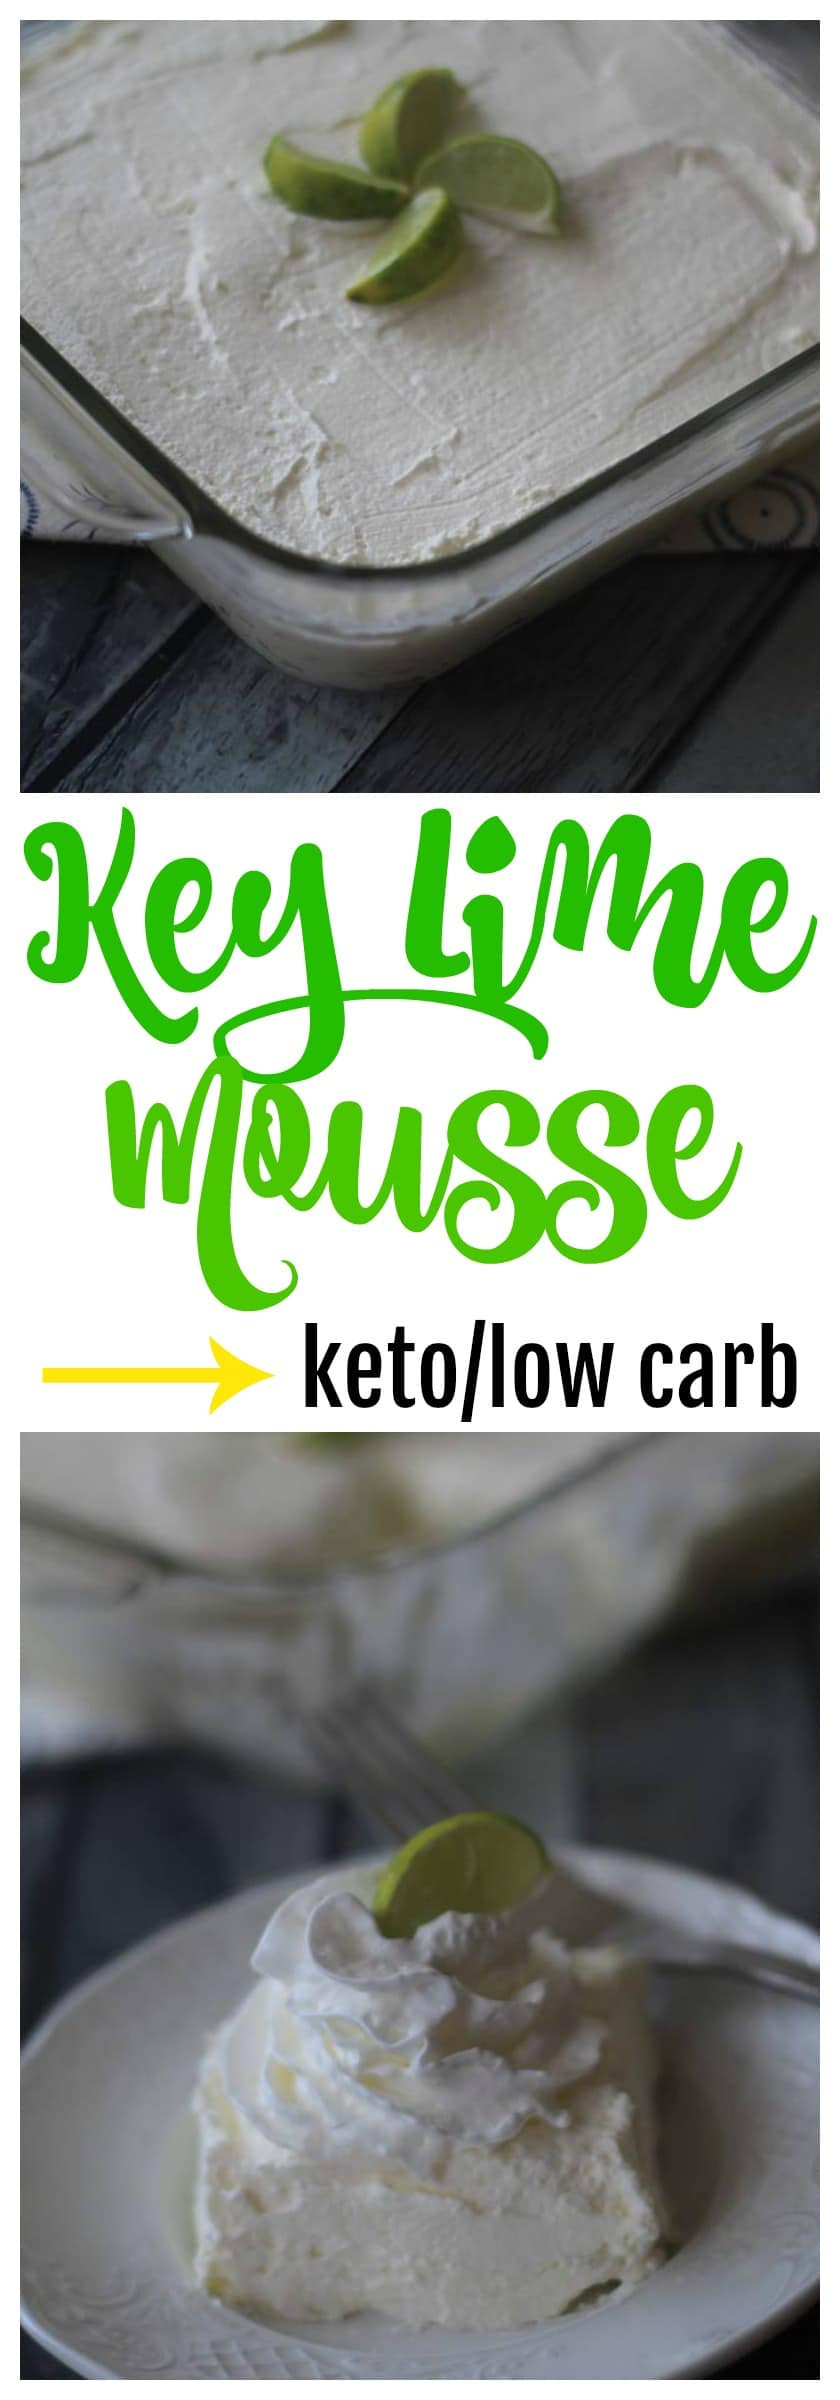 Low Carb Keto Desserts
 Keto Low Carb Key Lime Mousse Dessert Keto & Low Carb